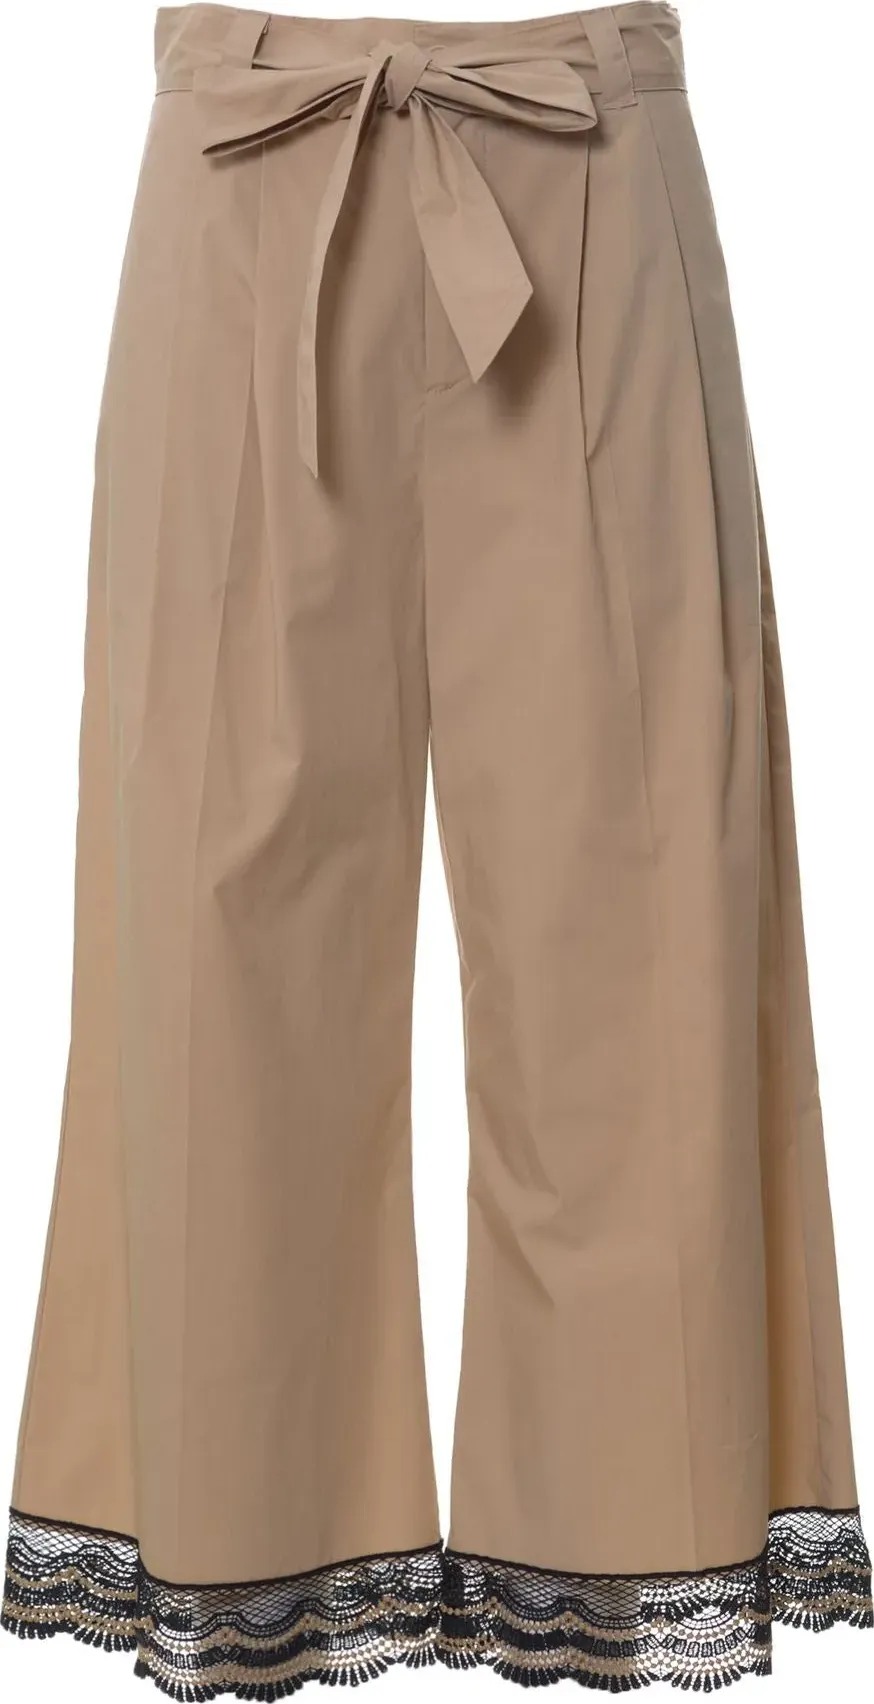 Twin-set pantaloni primavera/estate cotone